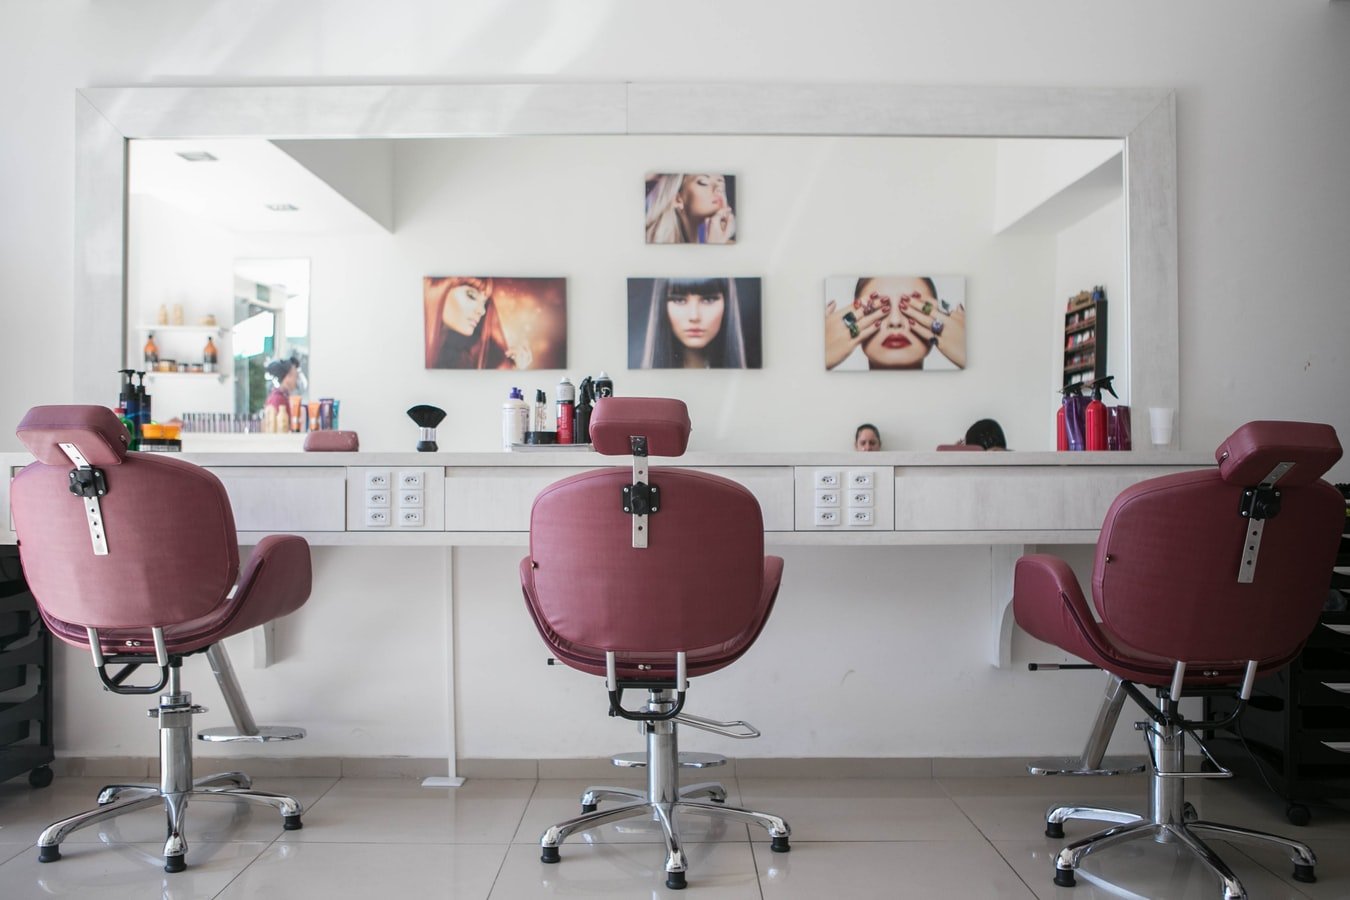 The beauty salon | Source: Unsplash